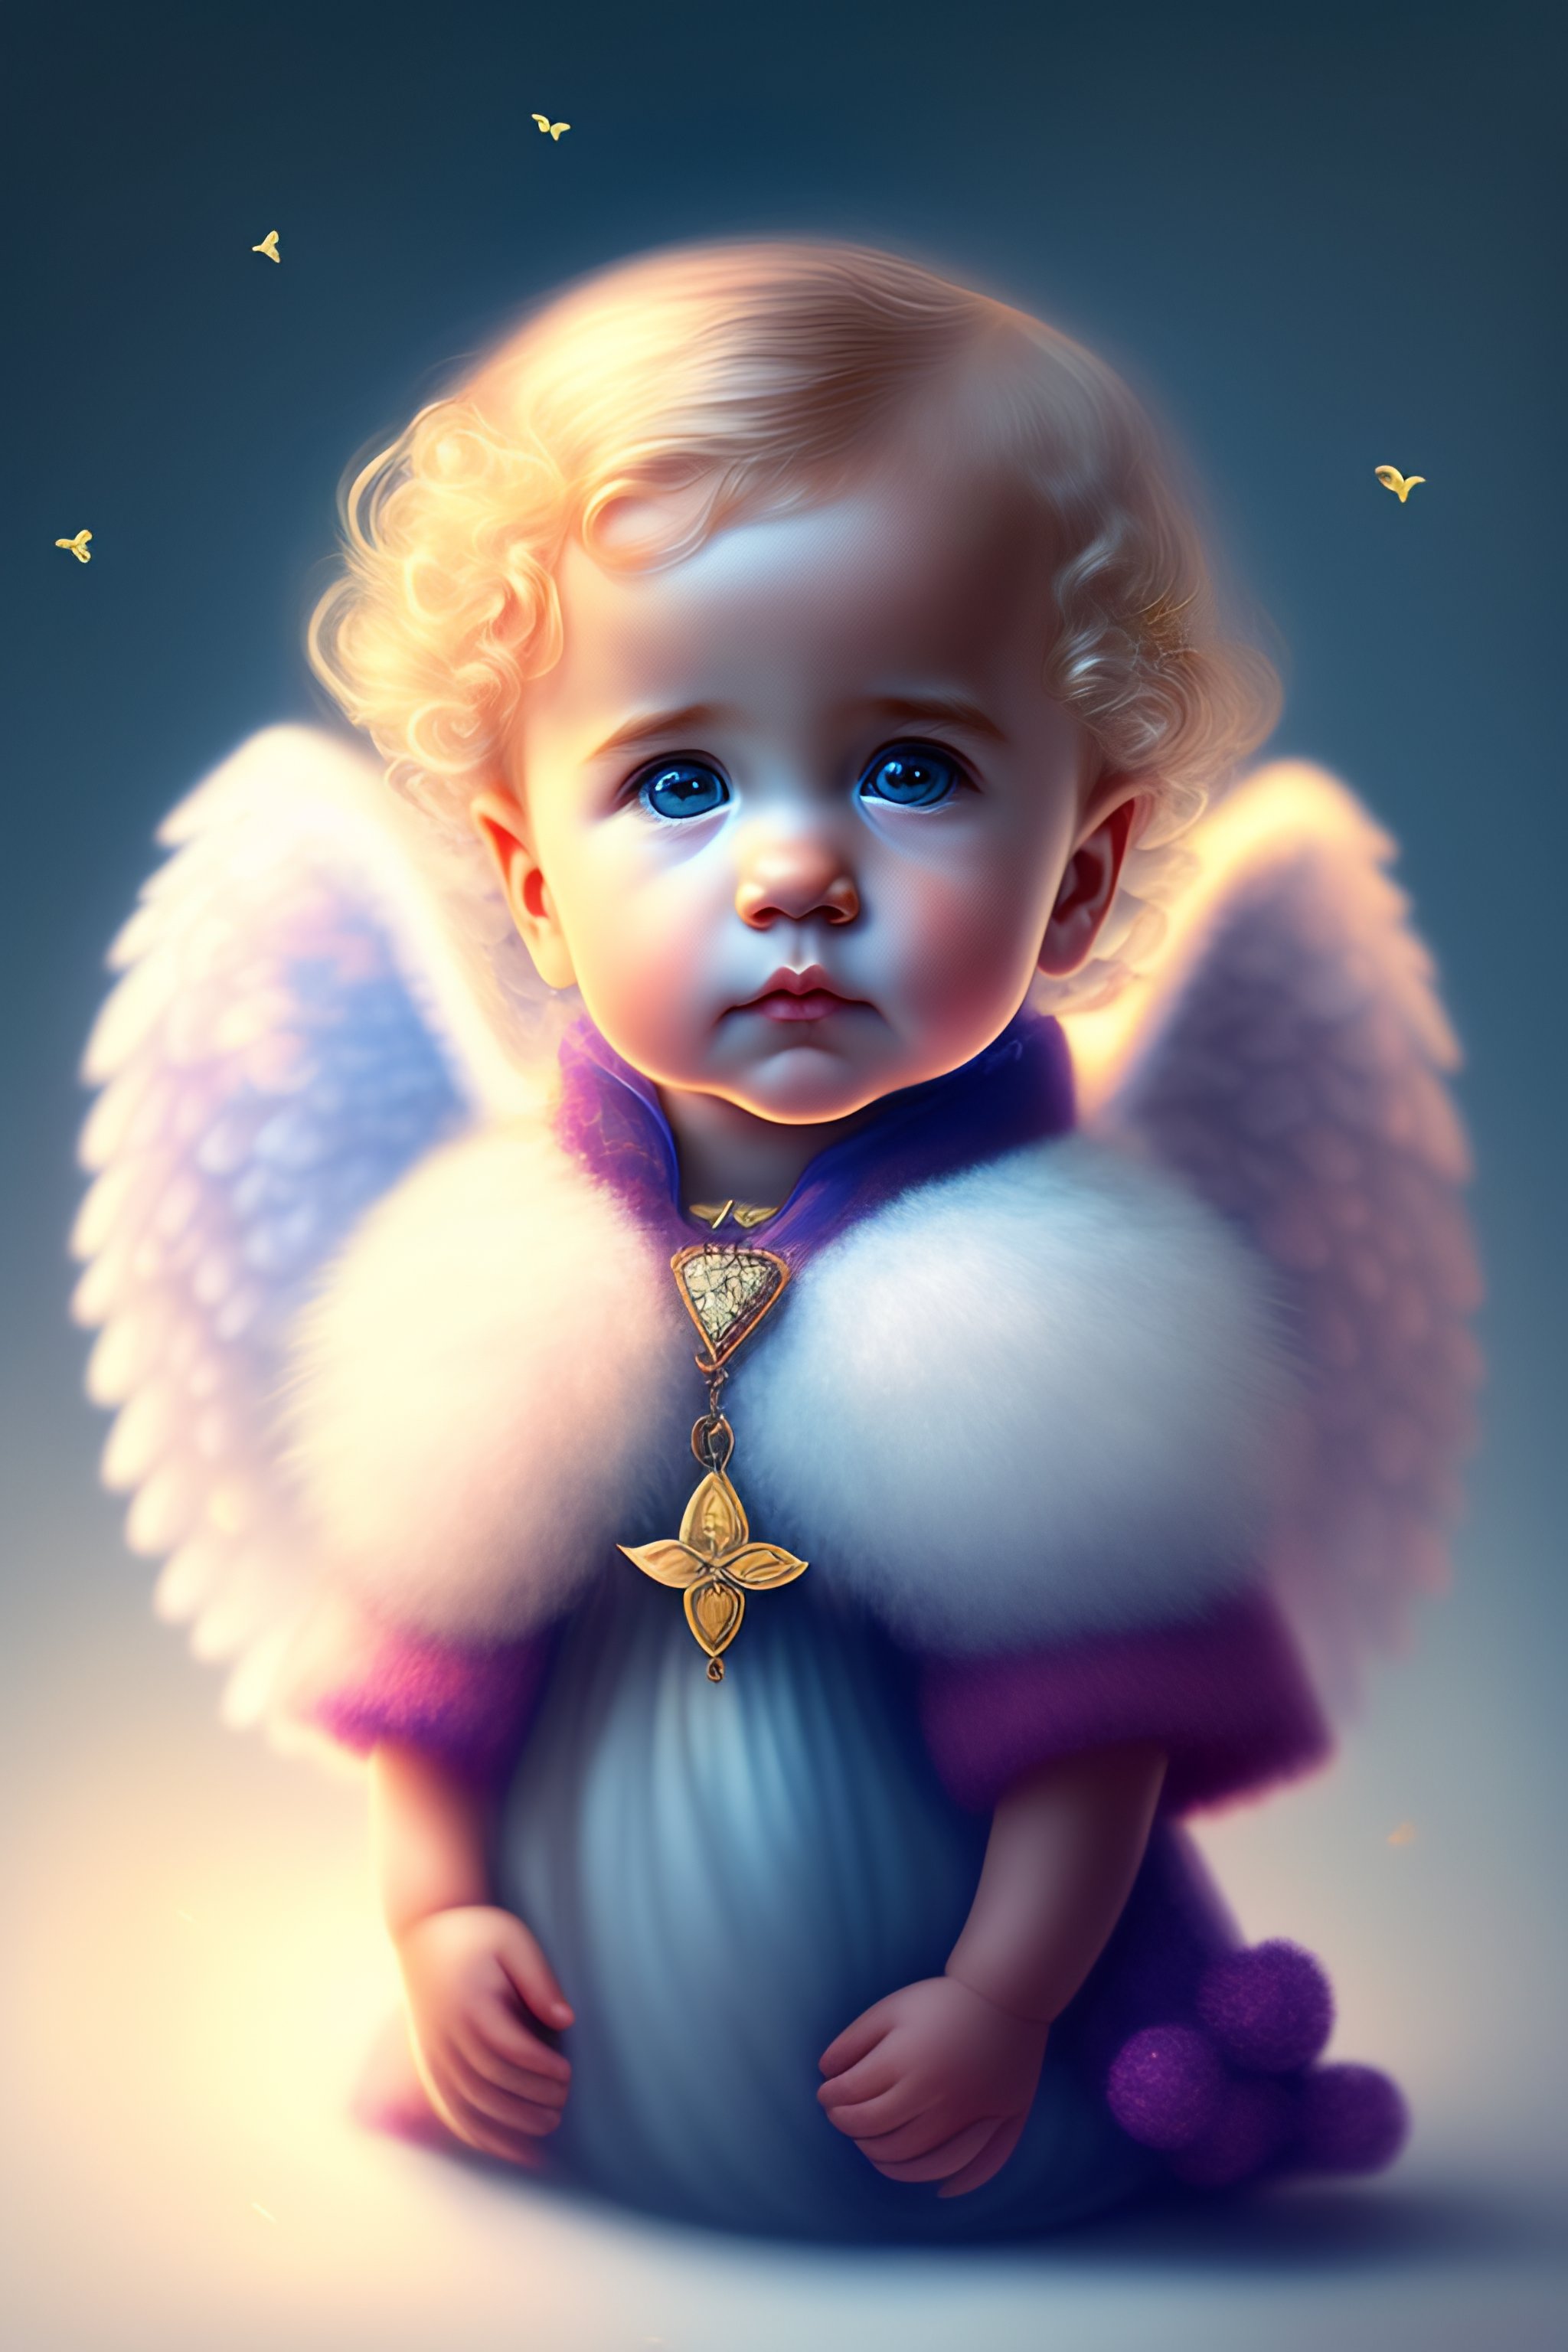 Cute little angel with wings